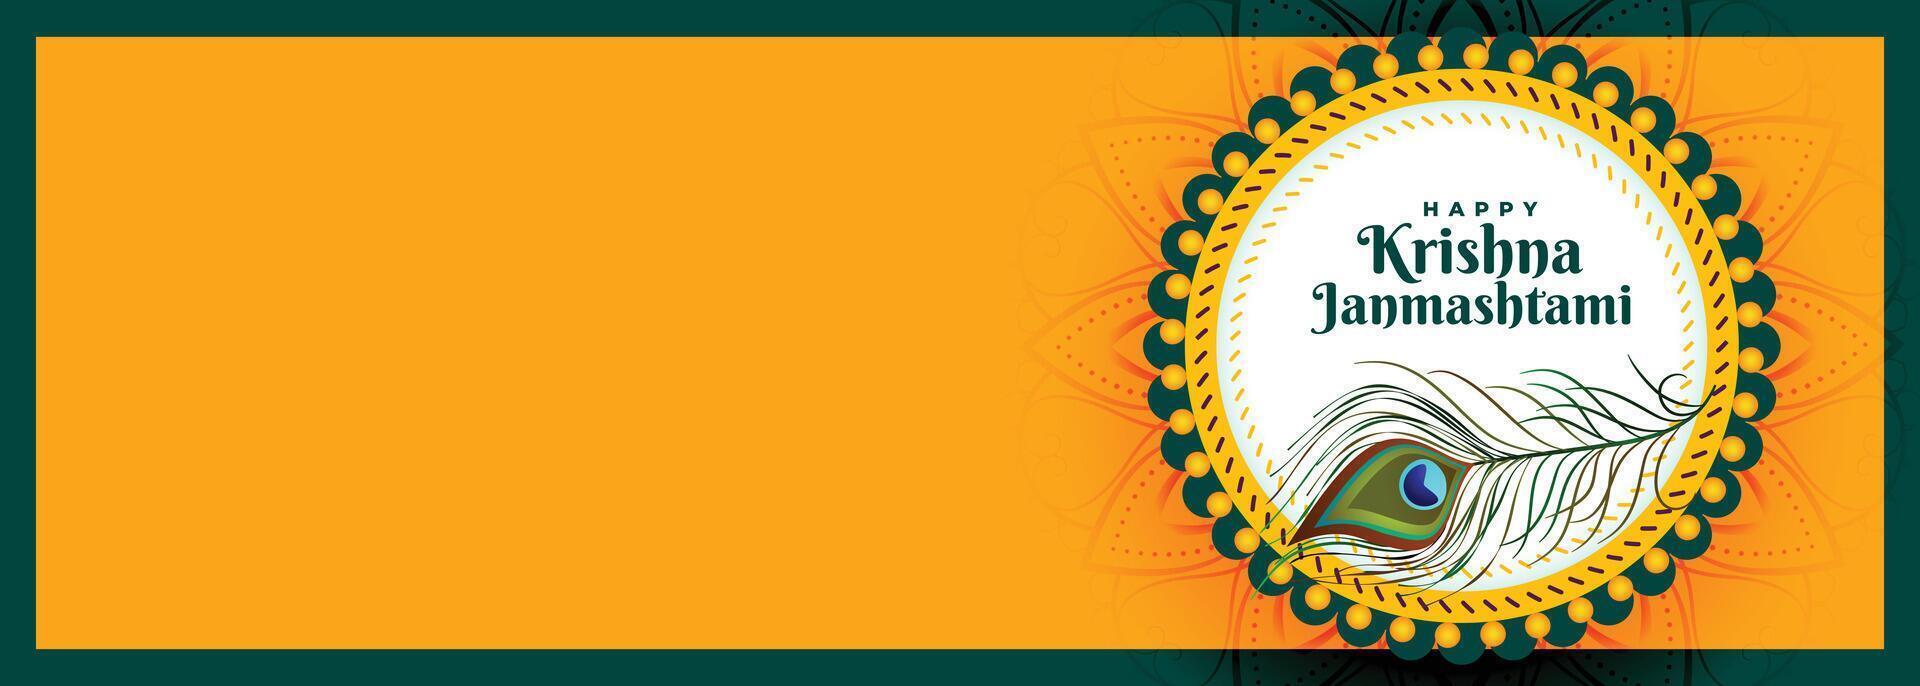 decorativo contento Krishna janmashtami festival bandera diseño vector